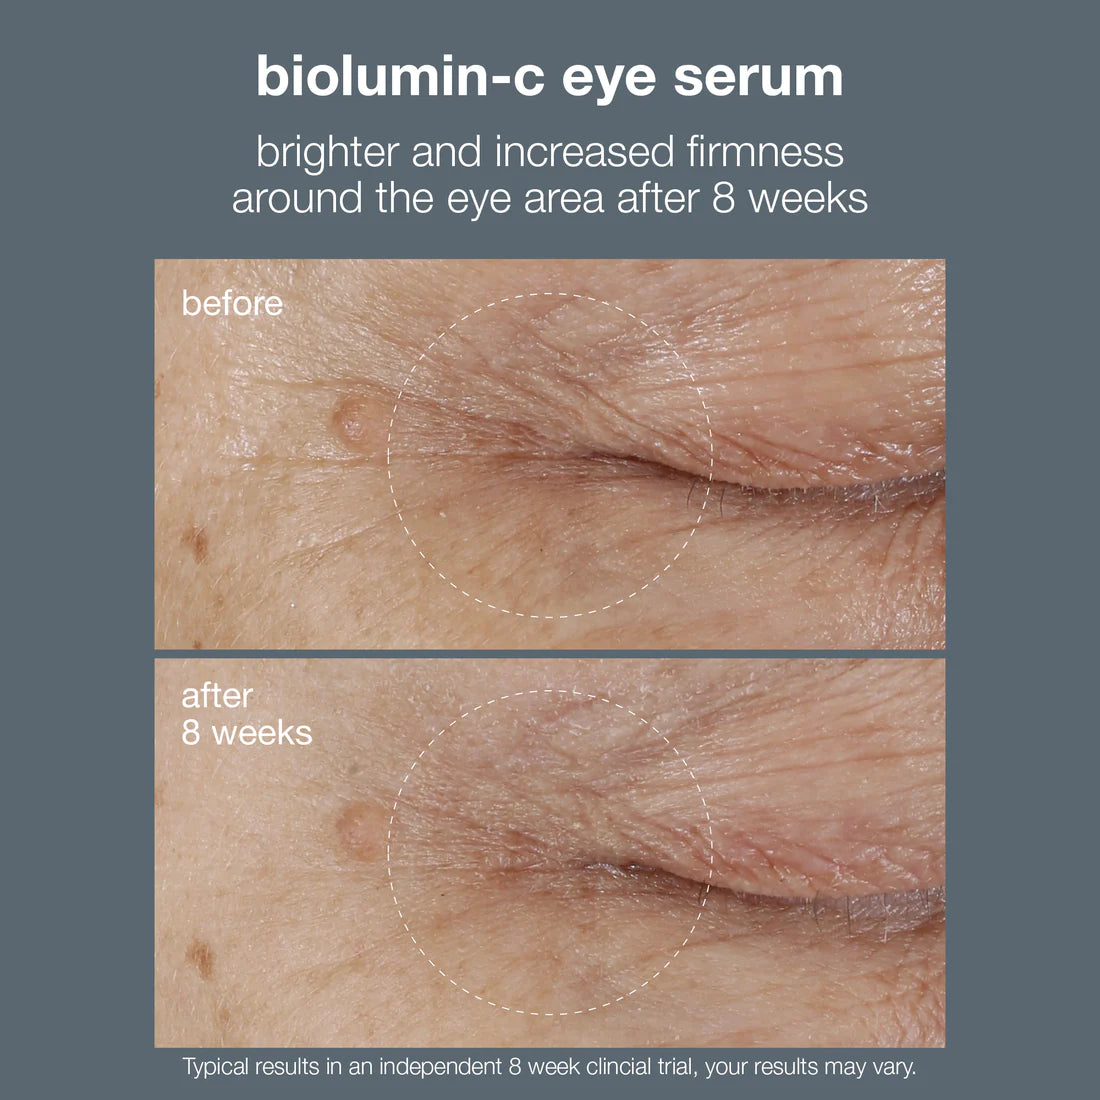 biolumin-c eye serum